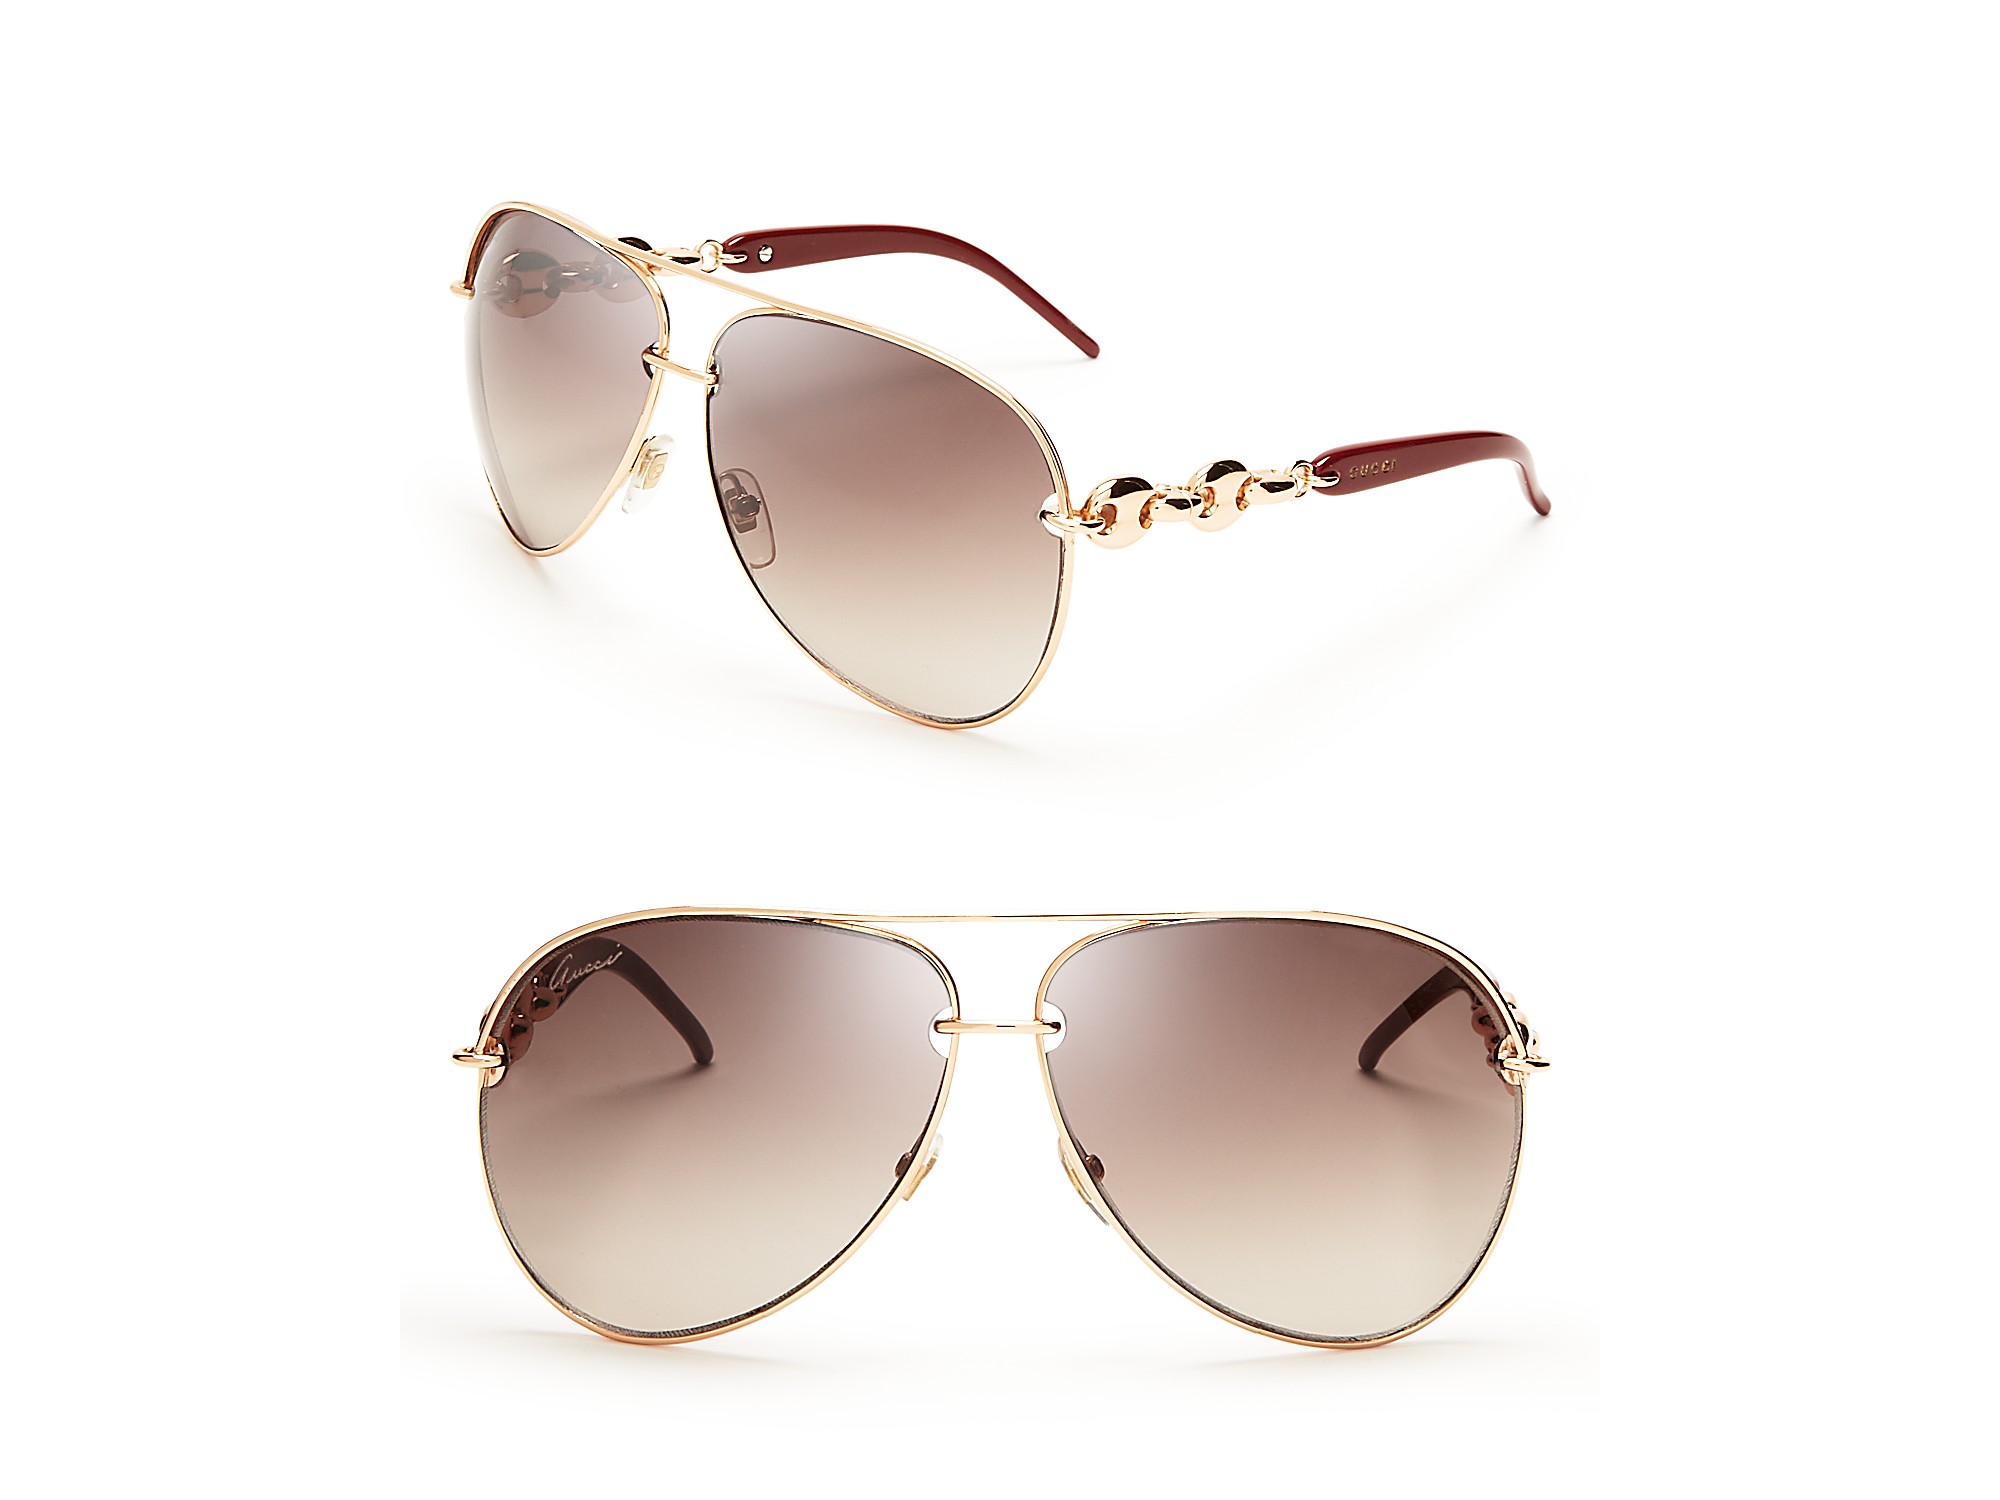 Gucci Chain Link Aviator Sunglasses in Metallic | Lyst